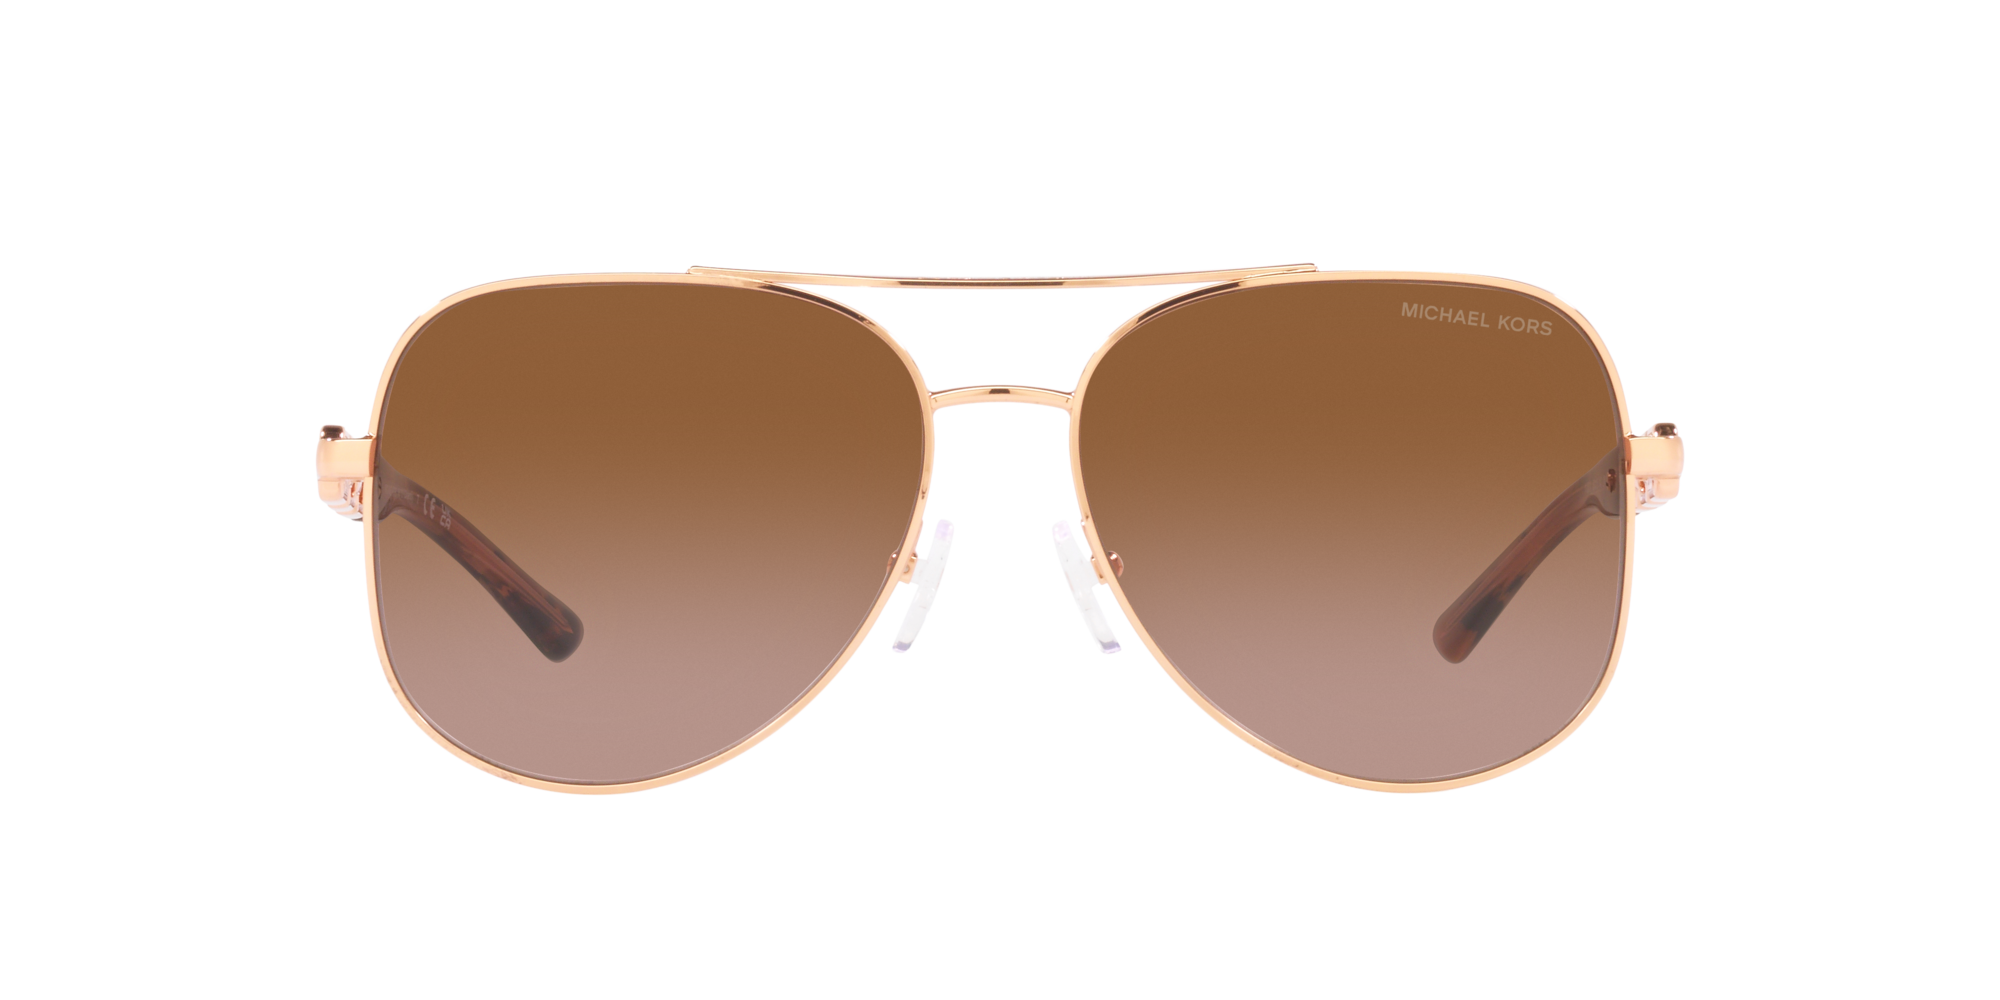 [products.image.front] Michael Kors CHIANTI 0MK1121 110813 Sonnenbrille